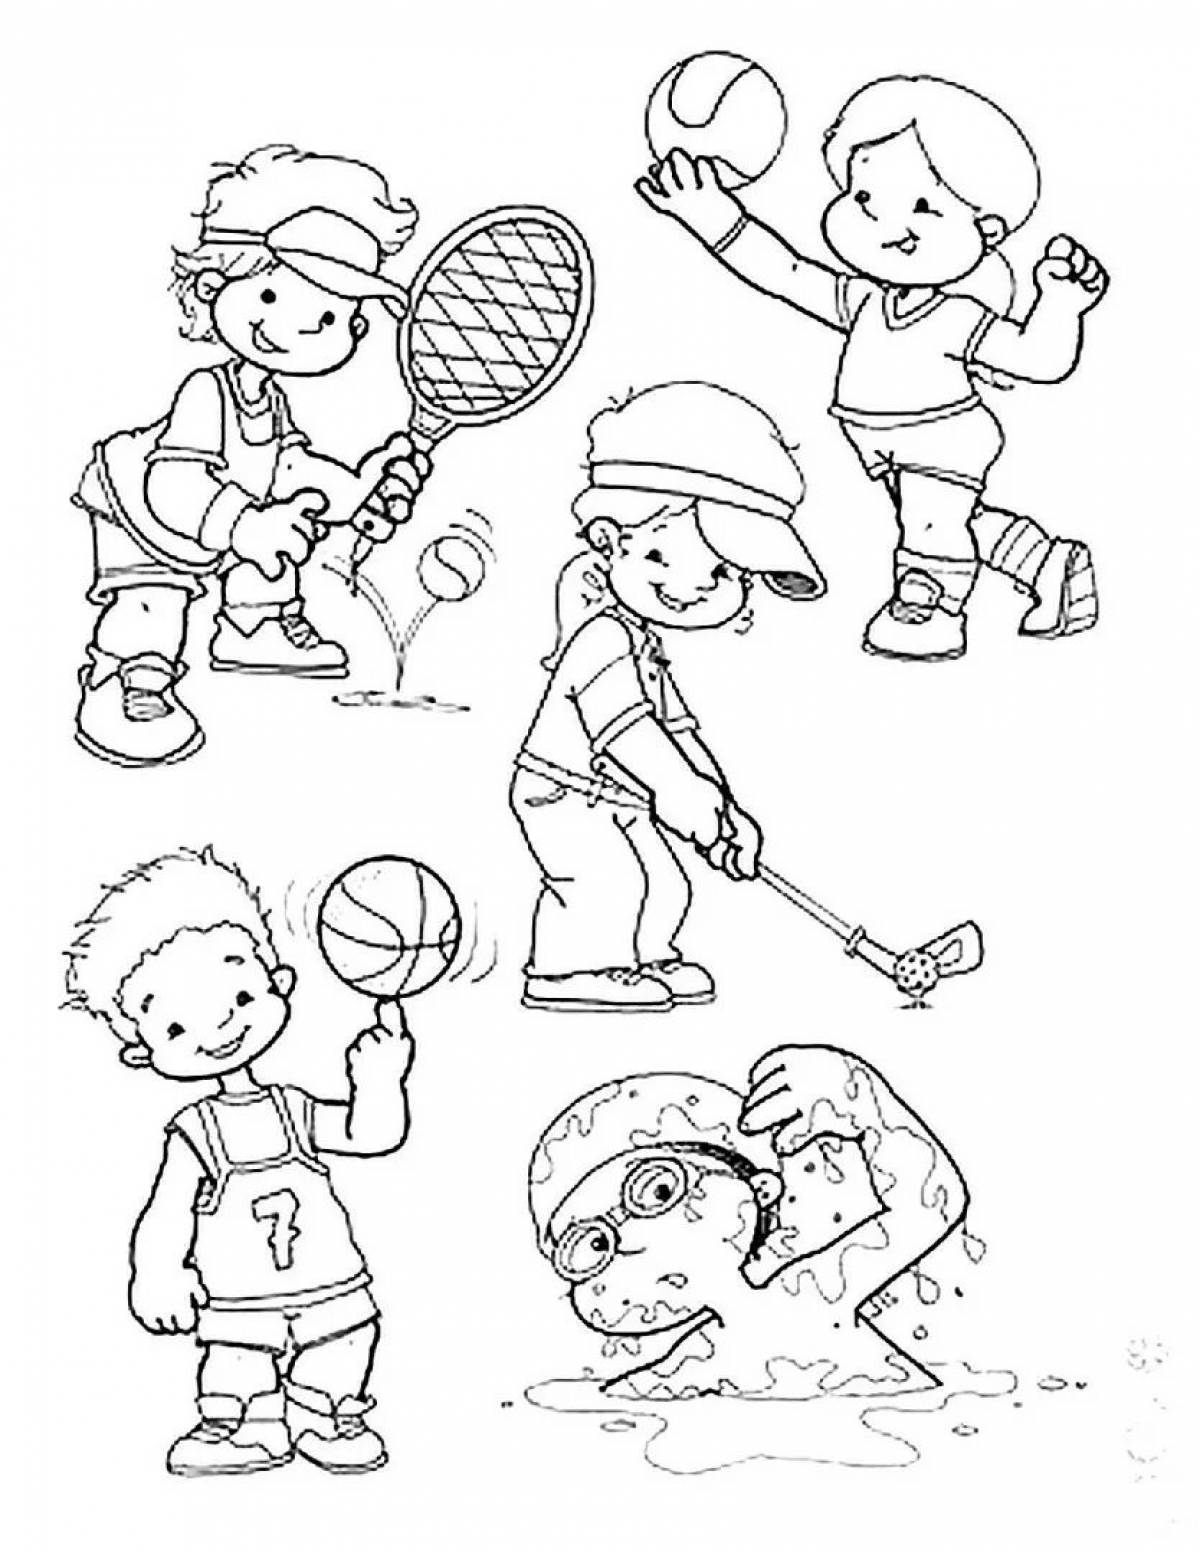 Preschool sports #4